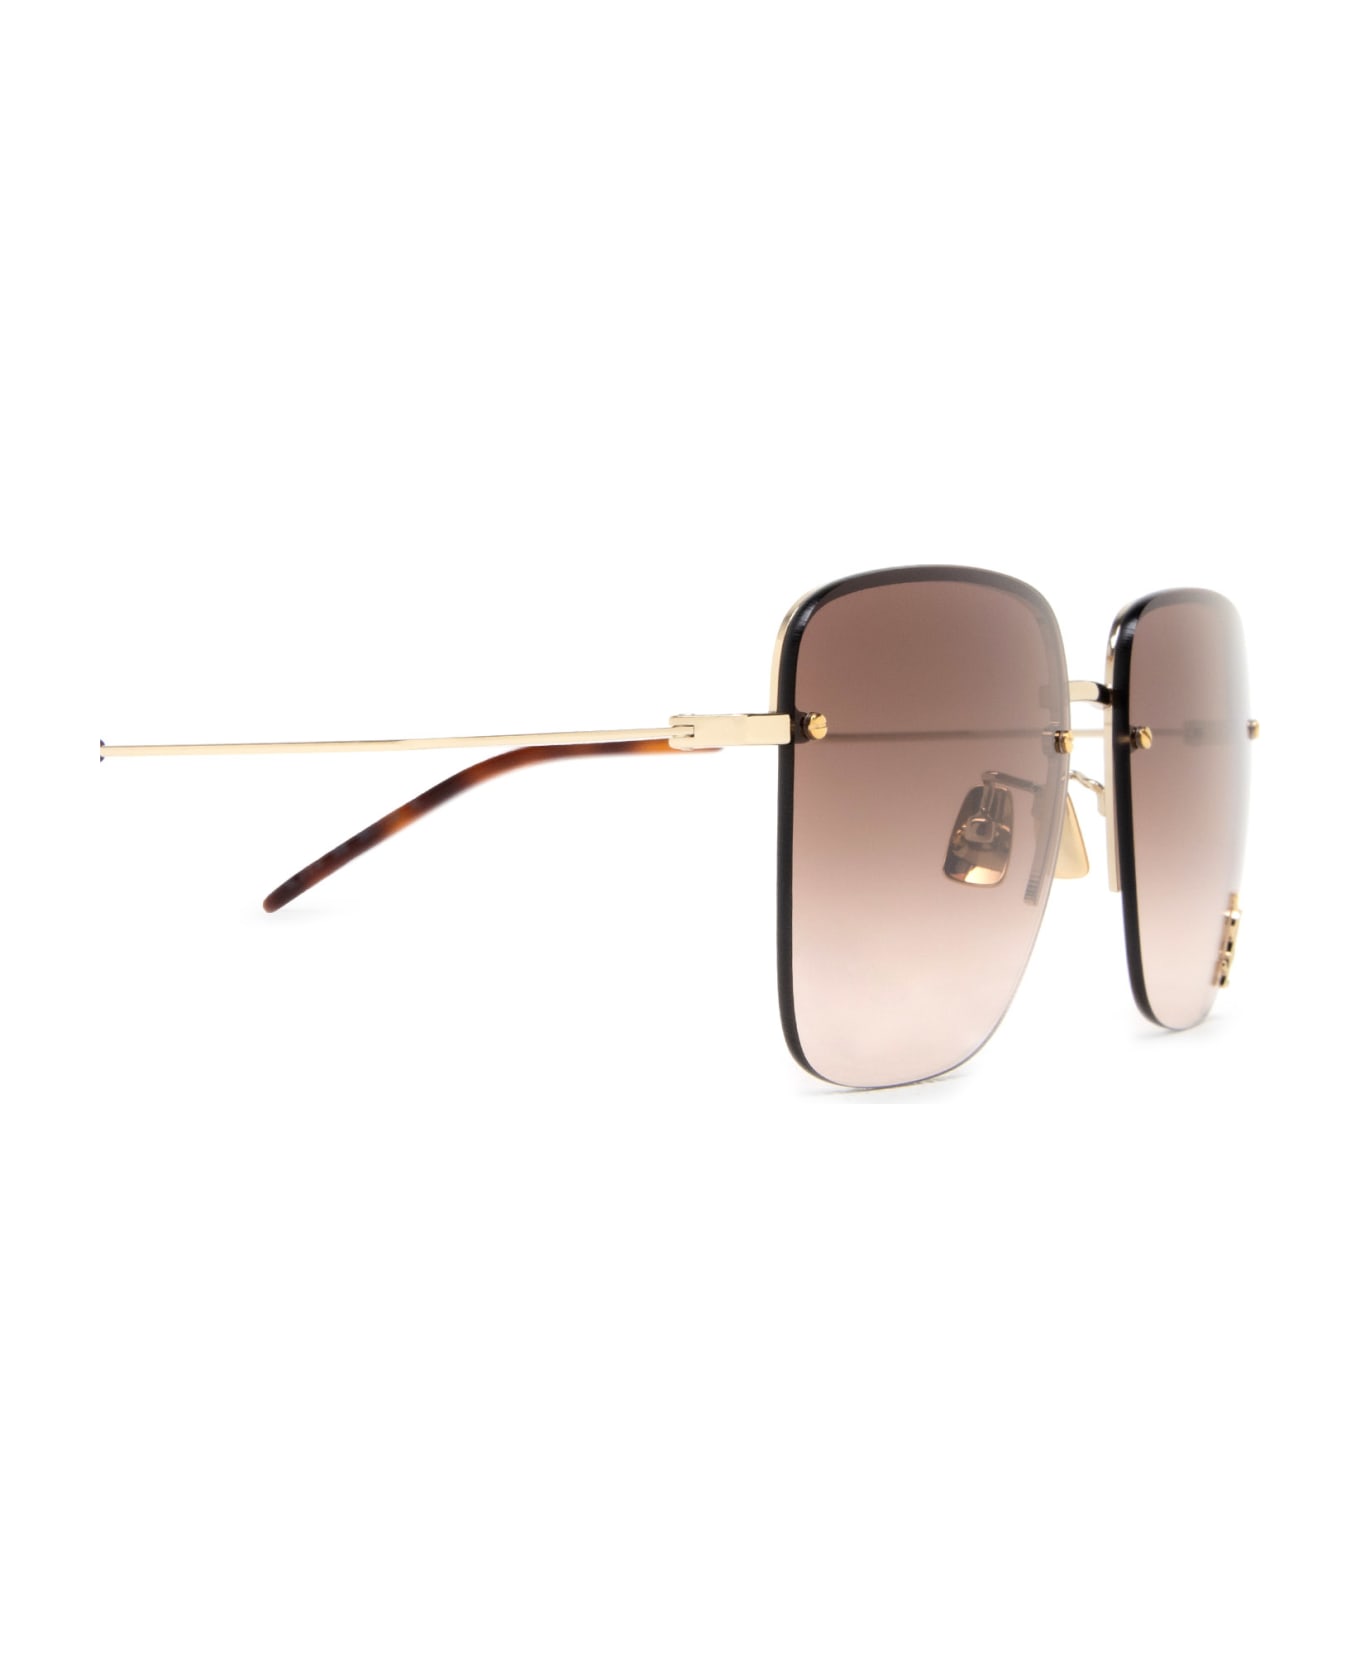 Saint Laurent Eyewear Sl 312 M Gold Sunglasses - Gold